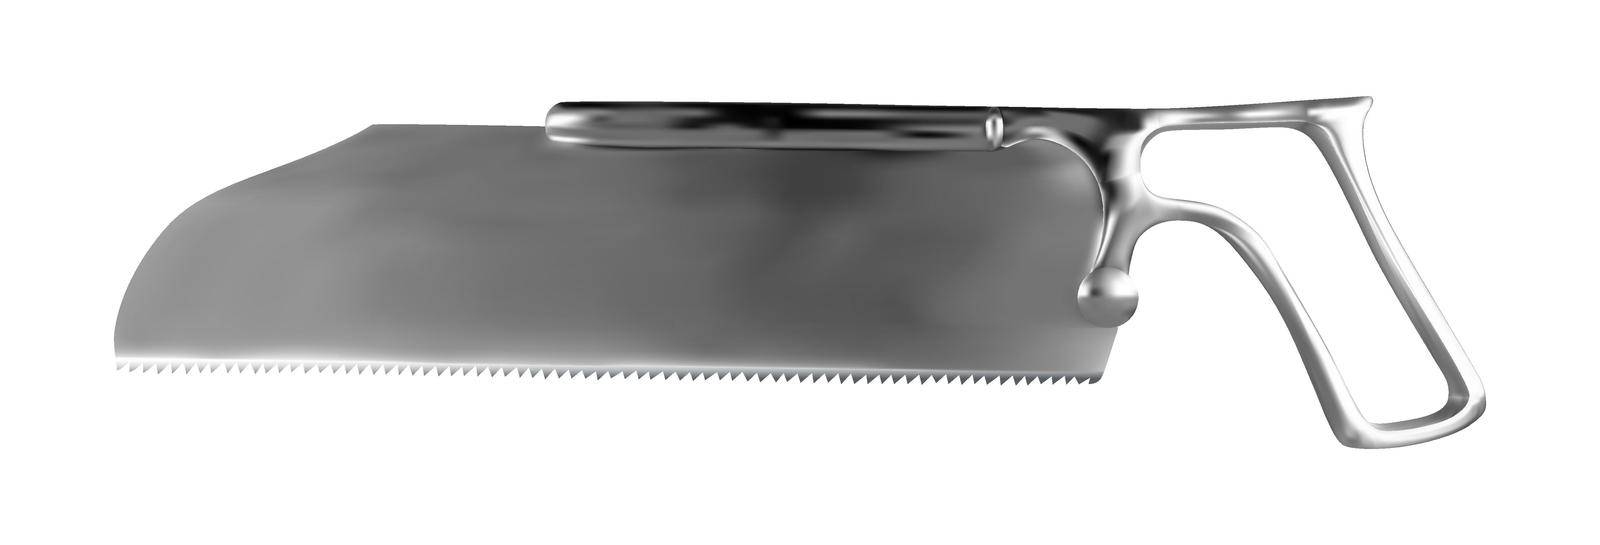 Satterlee Bone Saw with Ring Handle Stainless Steel Blade. Medical manual surgical instrument. Vector illustration by Nikolaiev_Oleksii